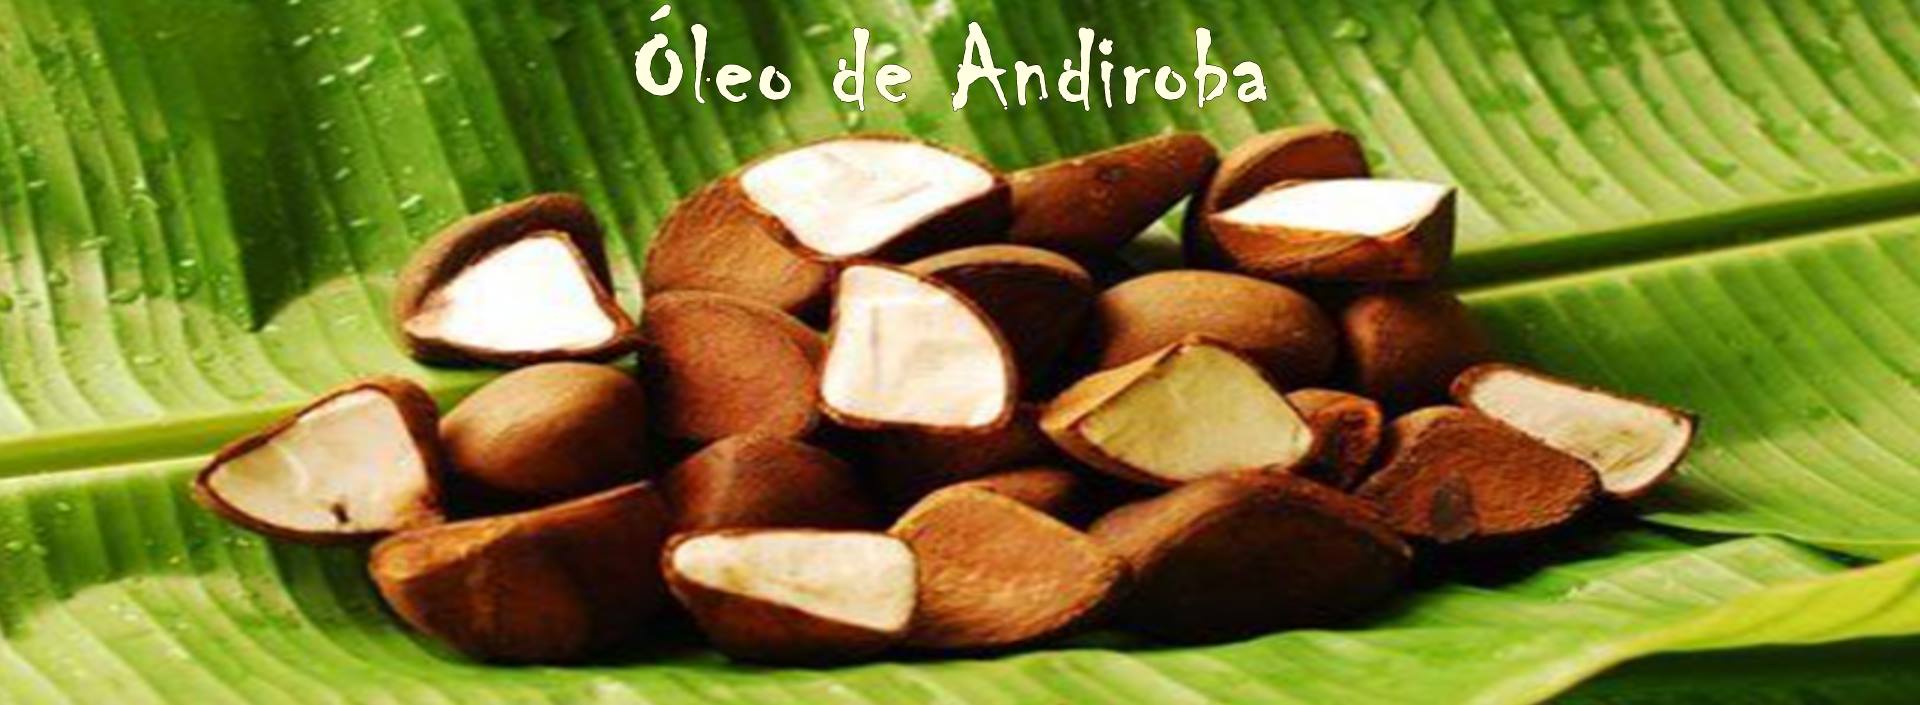 ÓLEO DE ANDIROBA 